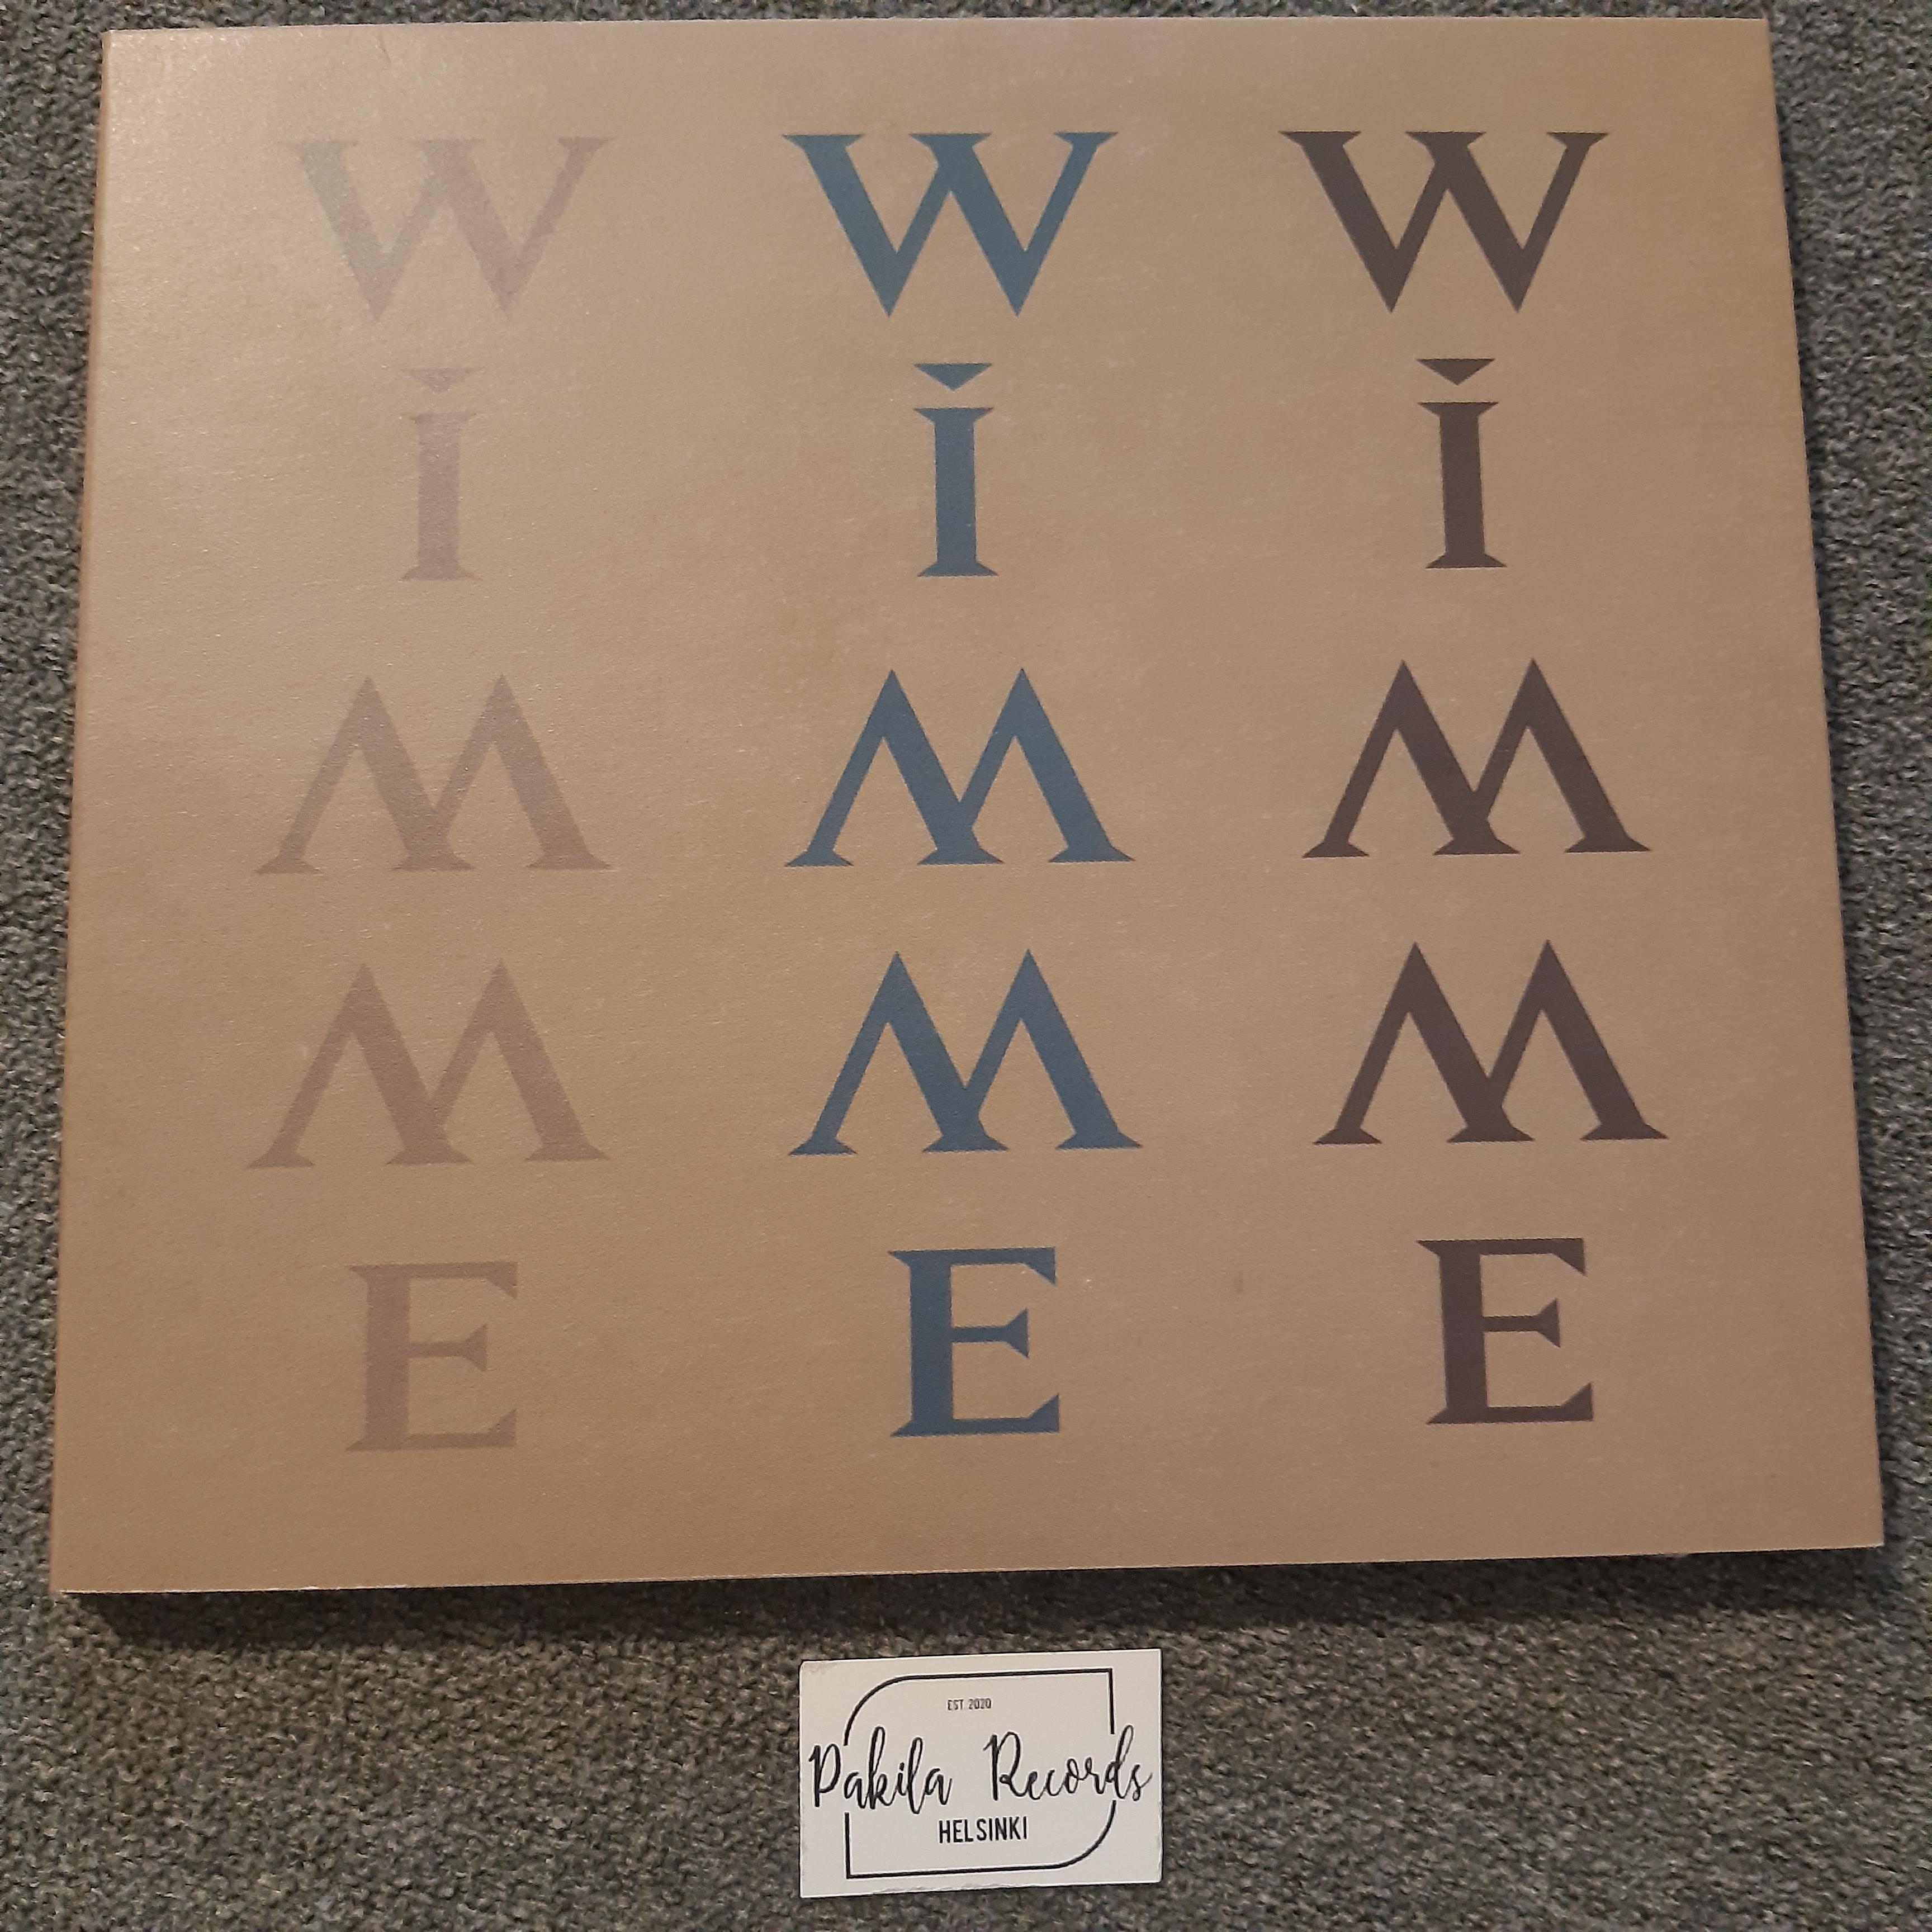 Wimme - Wimme - CD (käytetty)